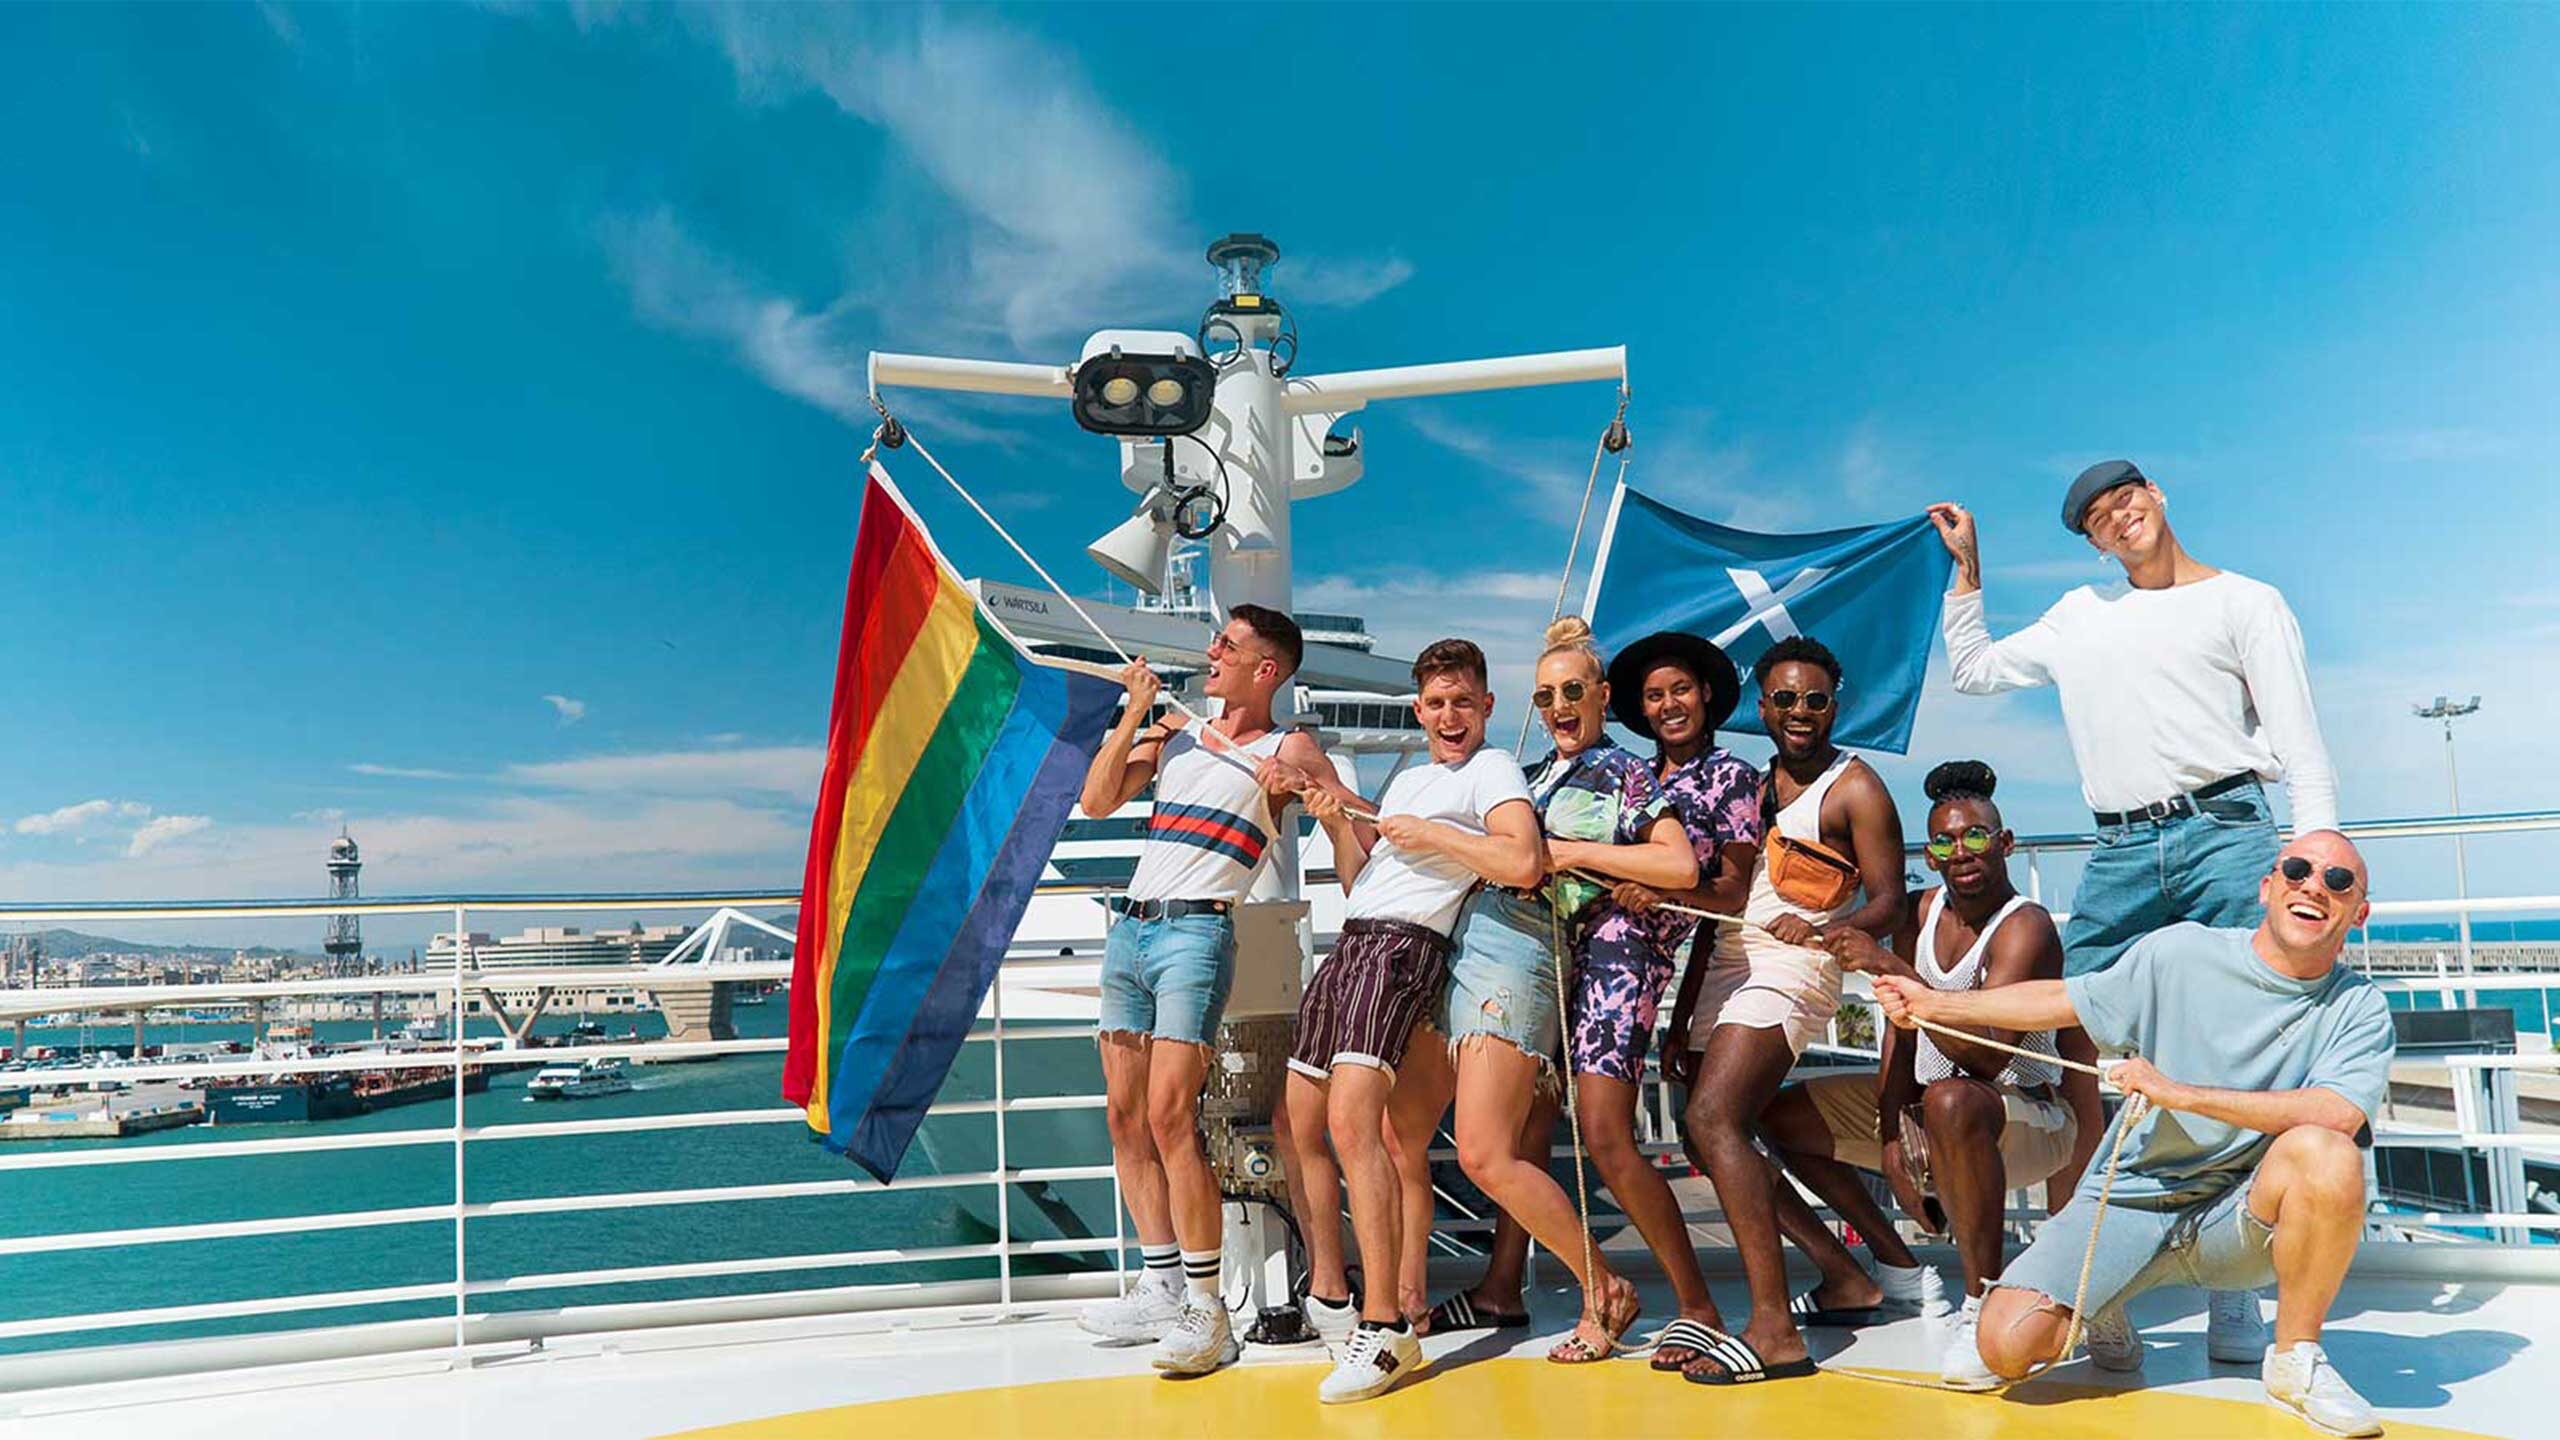 Celebrity Cruises & Gay Times UK Announce Video Mini-Series “Trailblazers”